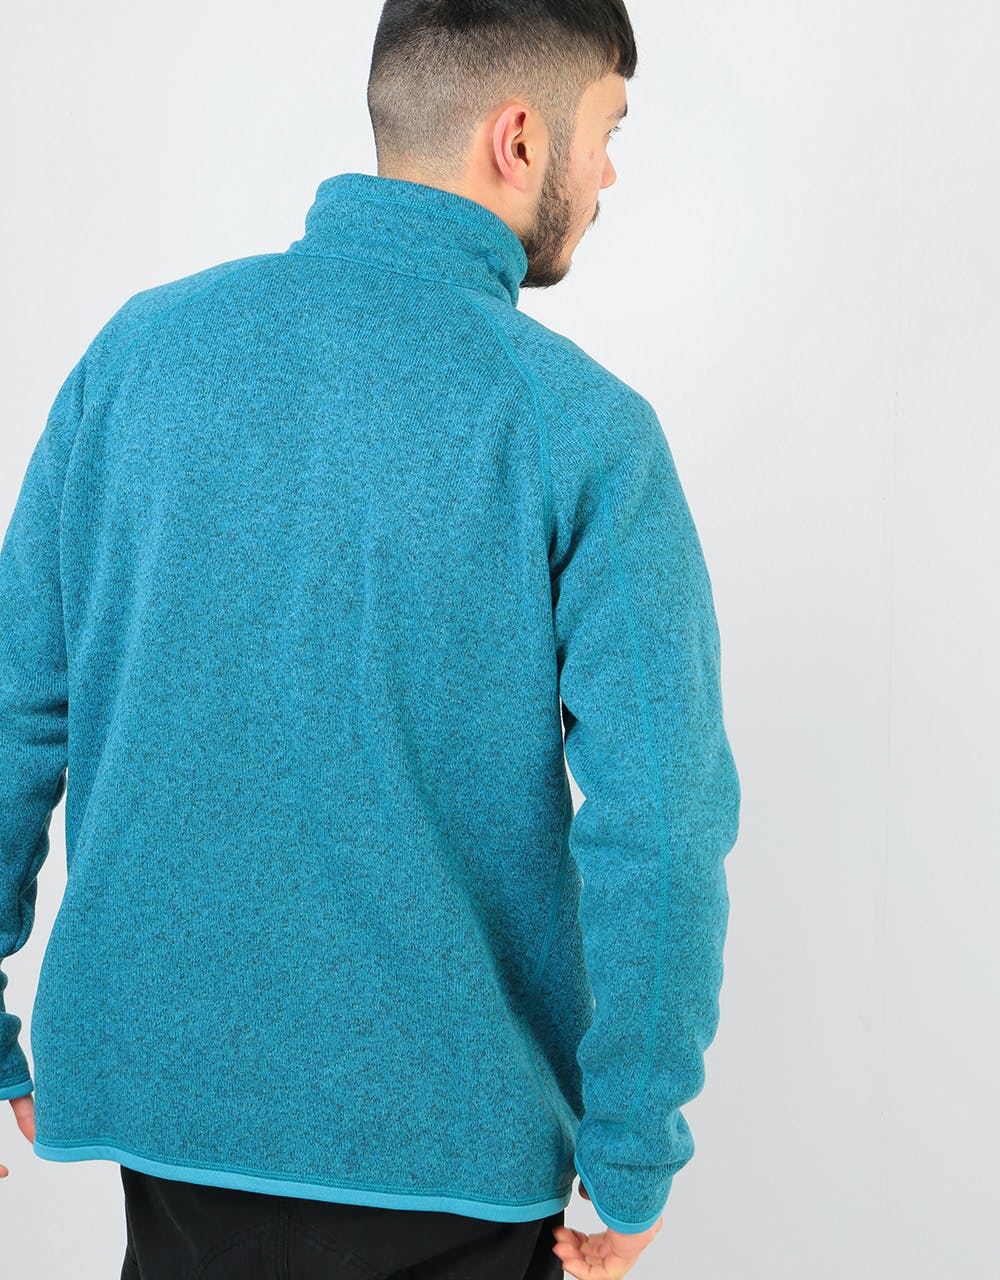 Patagonia Better Sweater® 1/4 Zip - Mako Blue